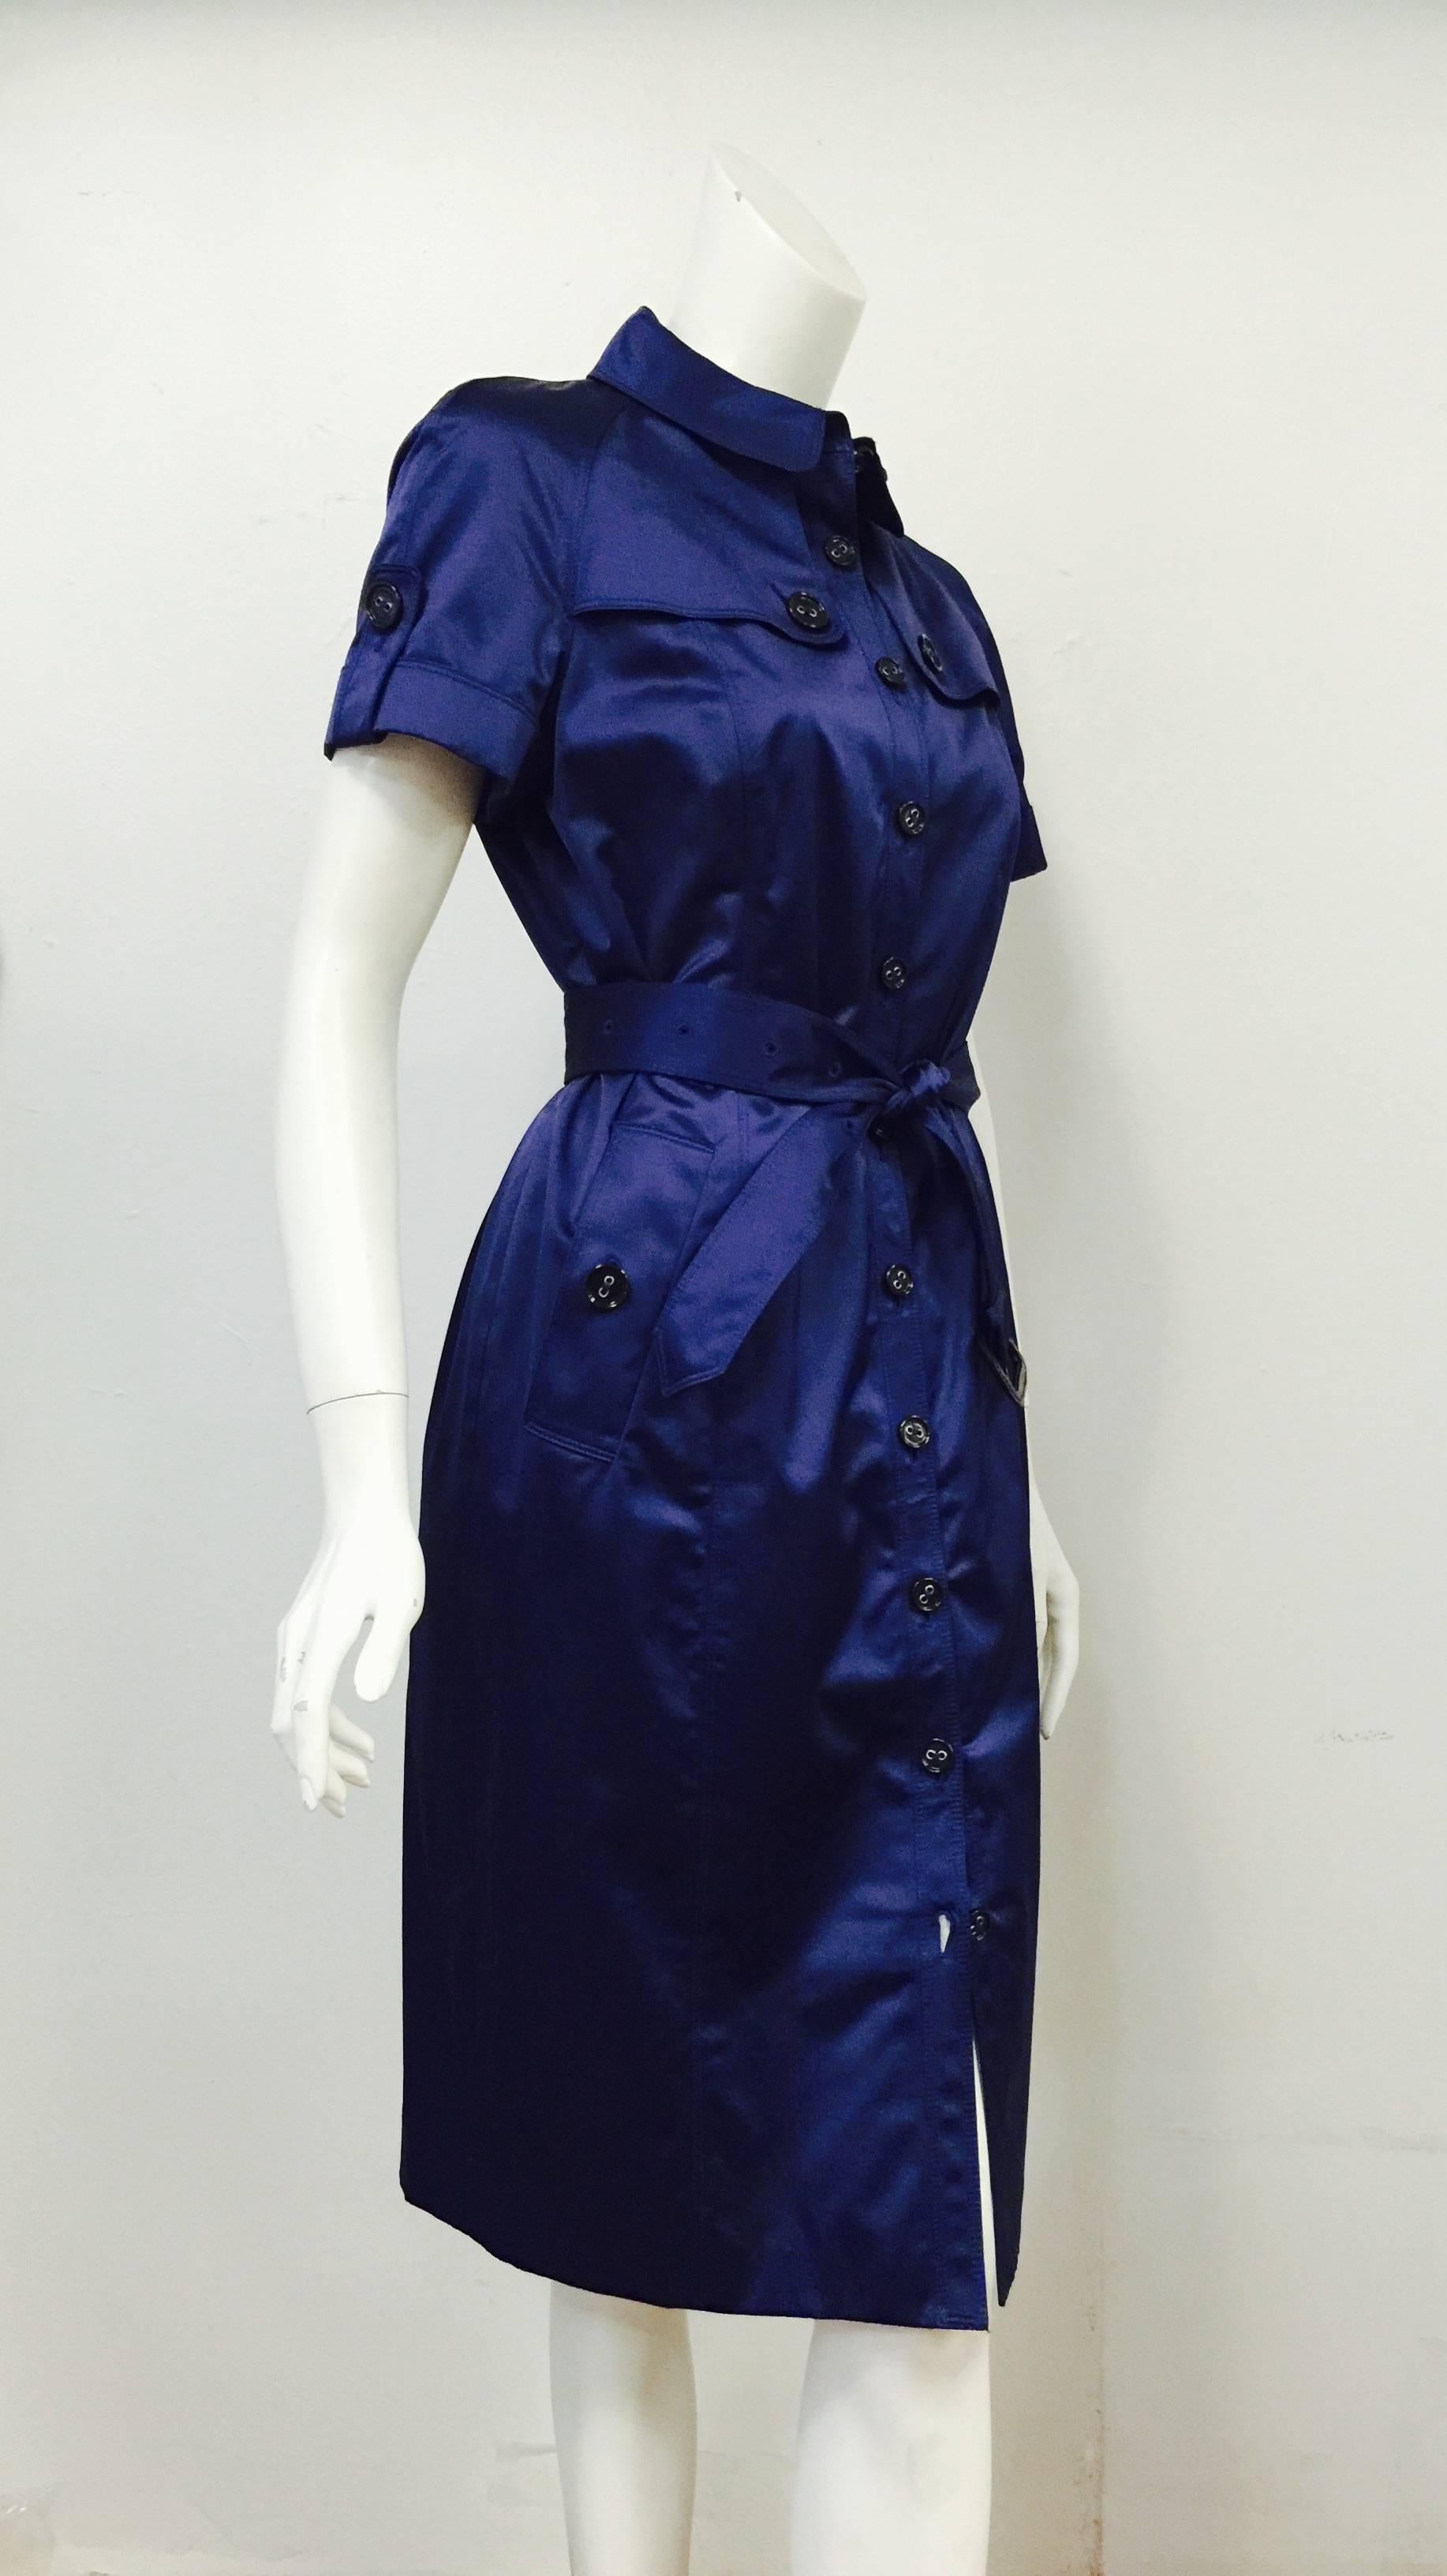 Burberry Dark Cobalt Blue Cotton Blend Short Sleeve Coat Dress  In Excellent Condition For Sale In Palm Beach, FL